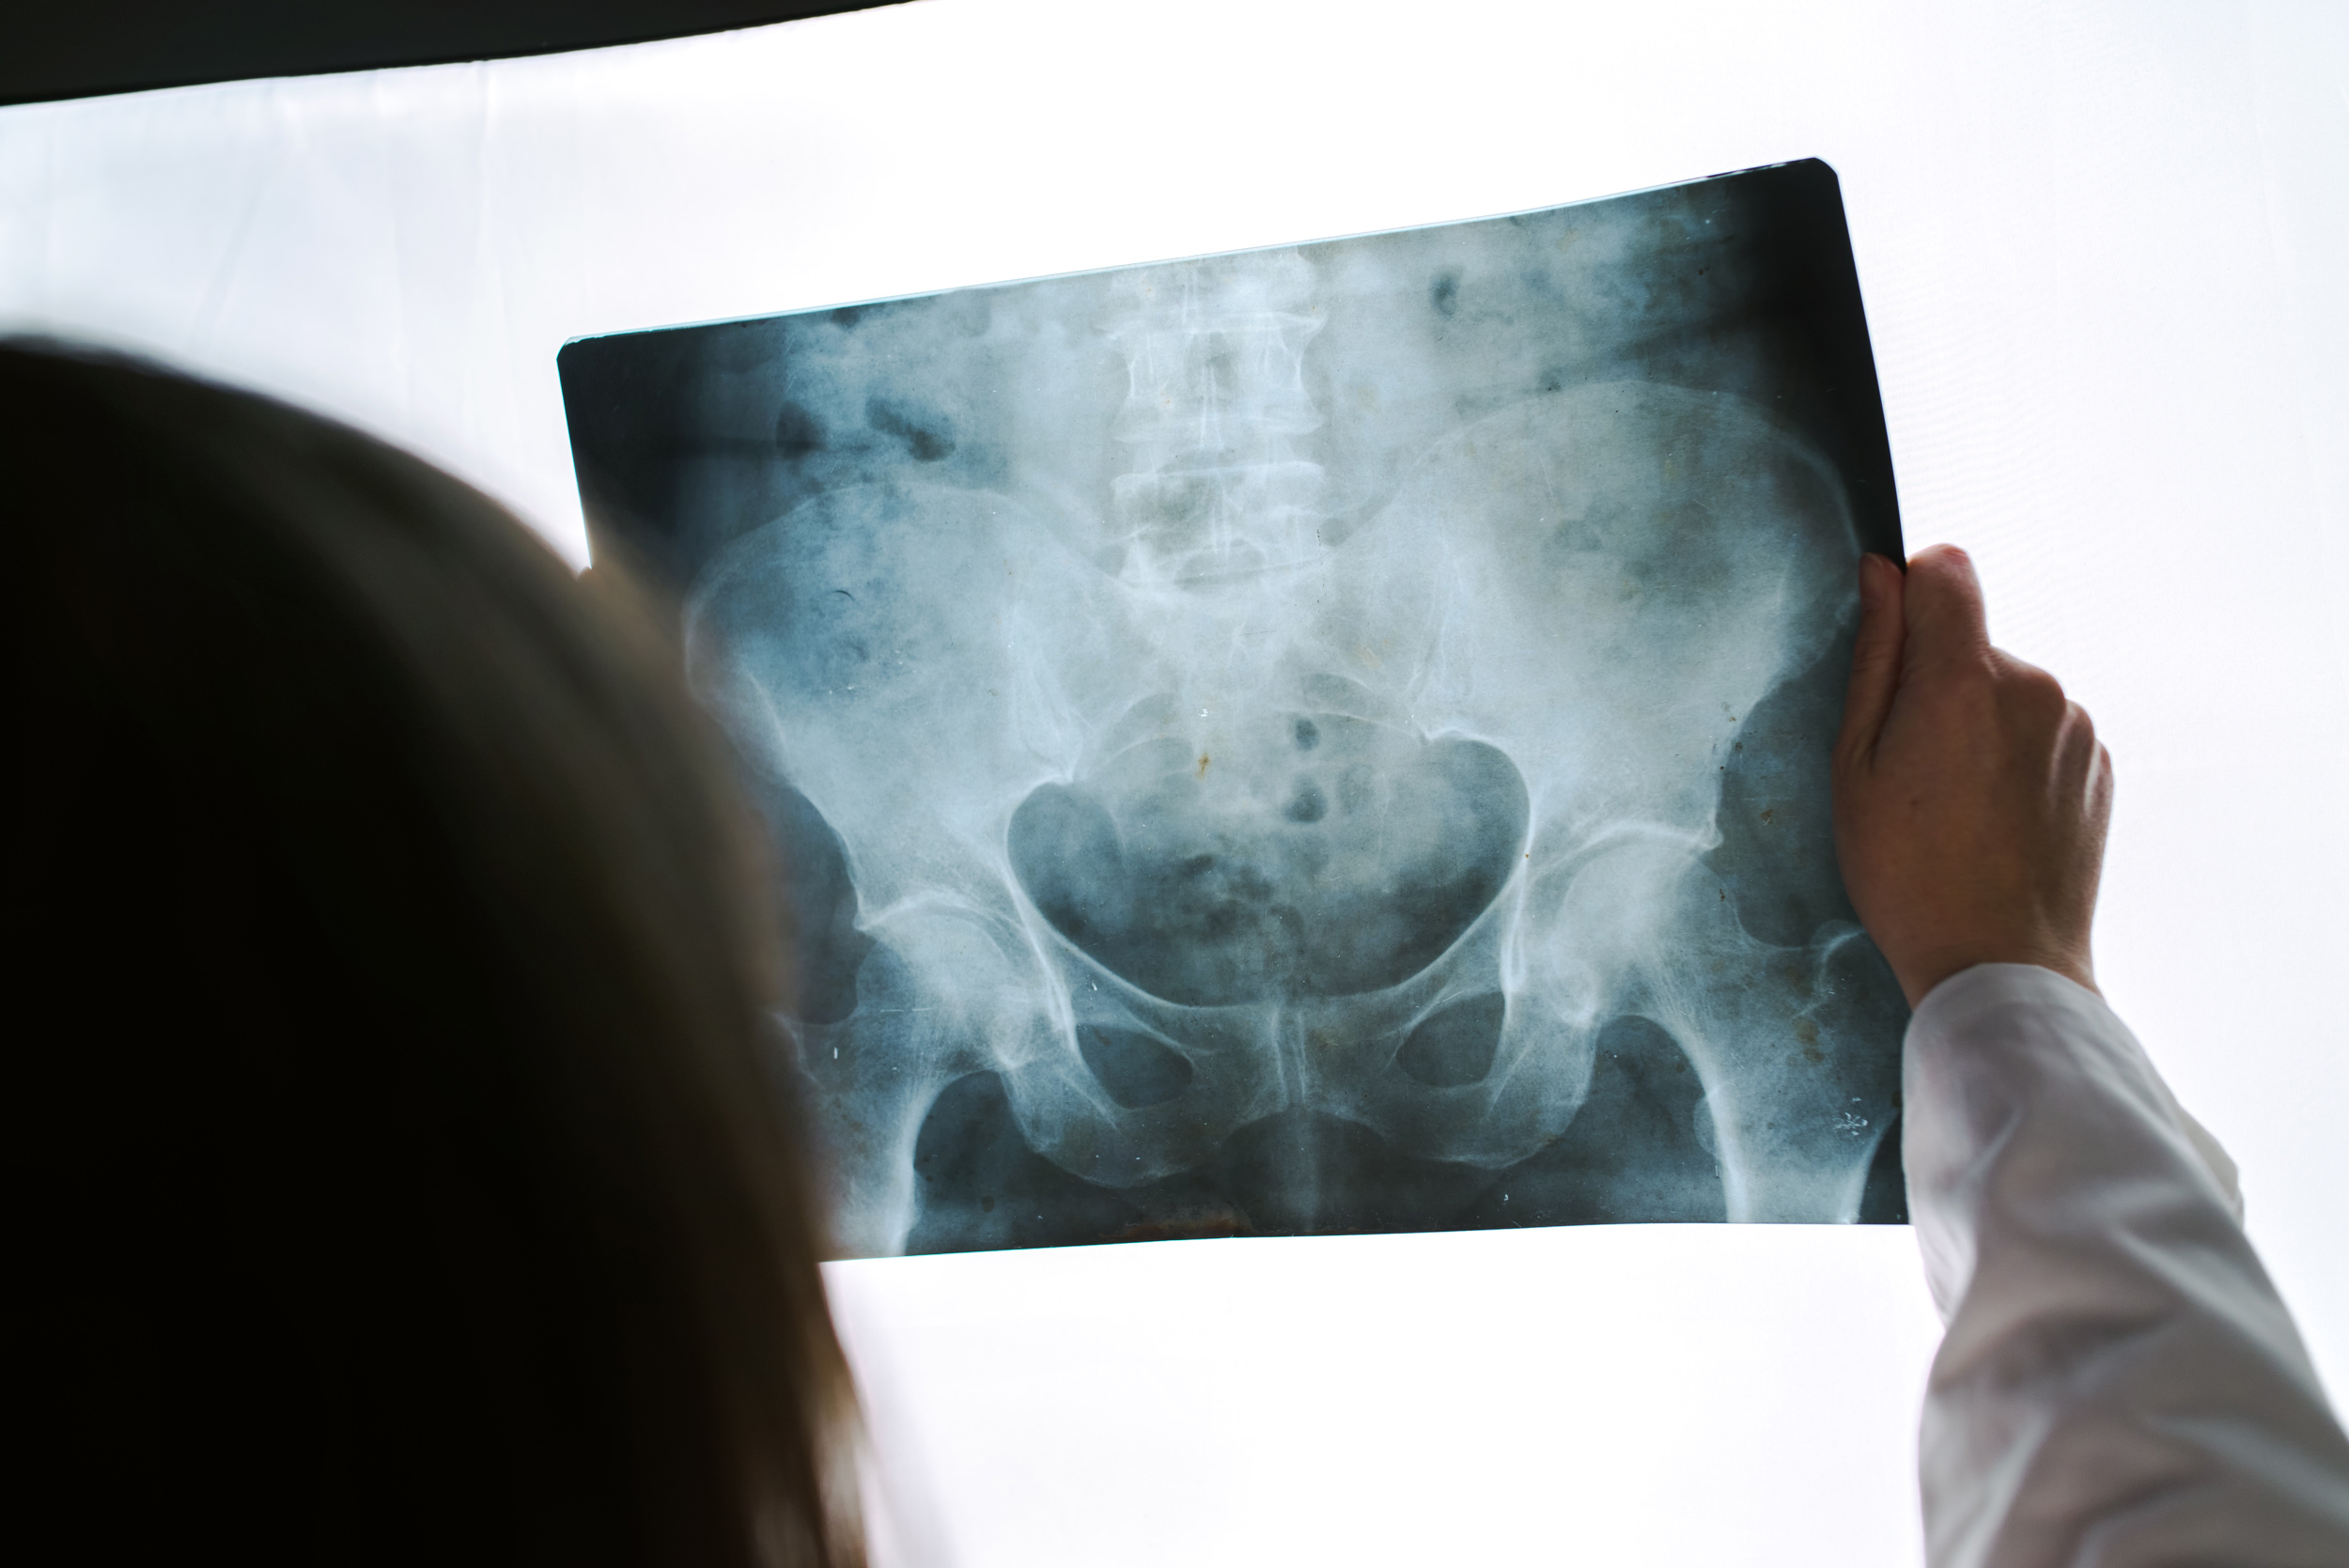 female doctor examining pelvis x-ray in hospital